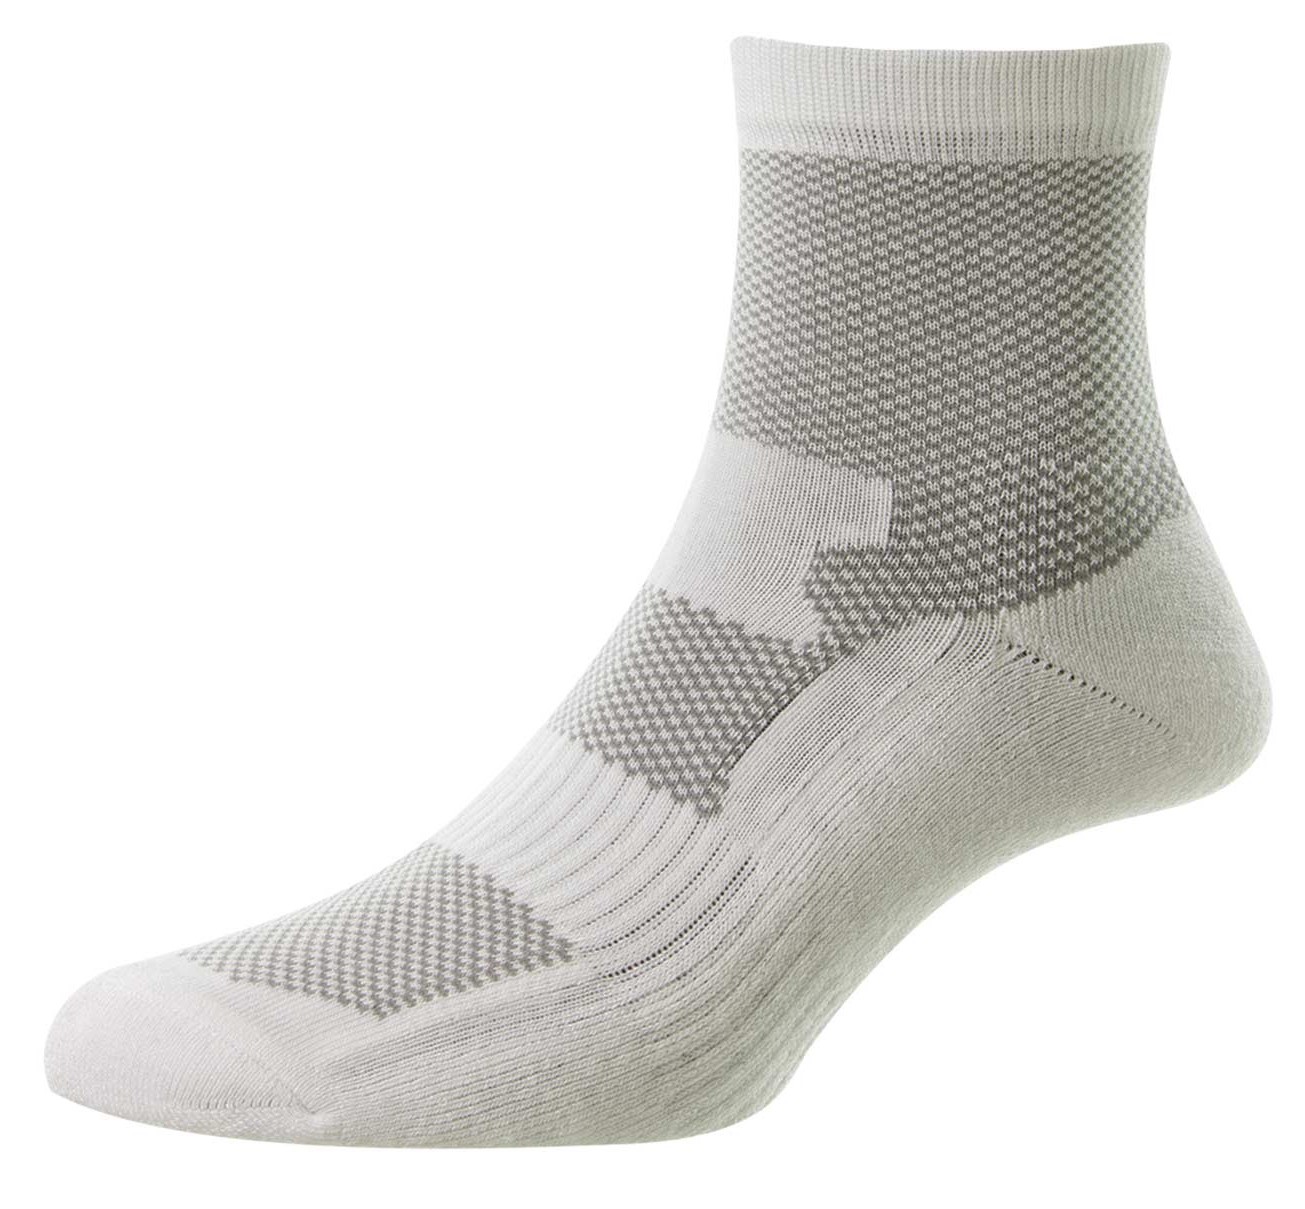 HJ Socks HJ7452 White size 6-11